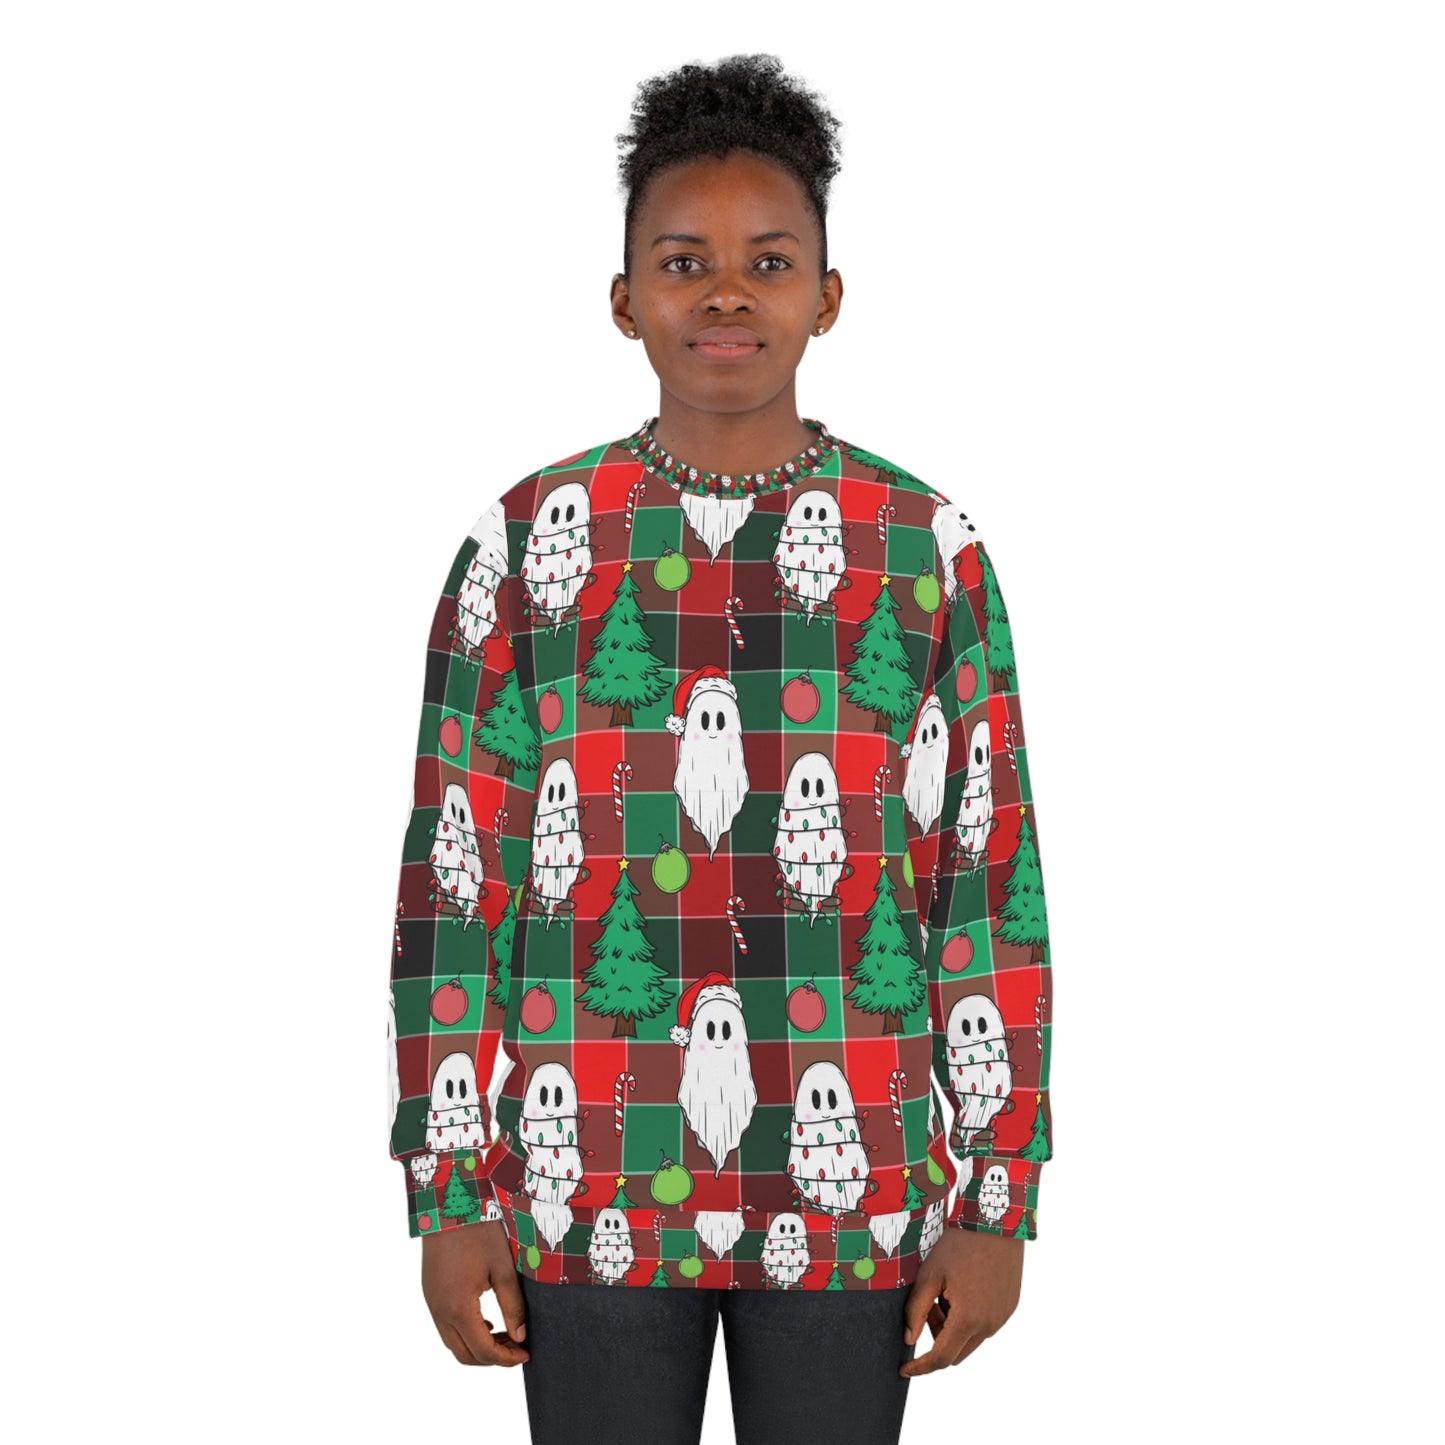 Christmas ghosts Unisex Sweatshirt for holiday season.